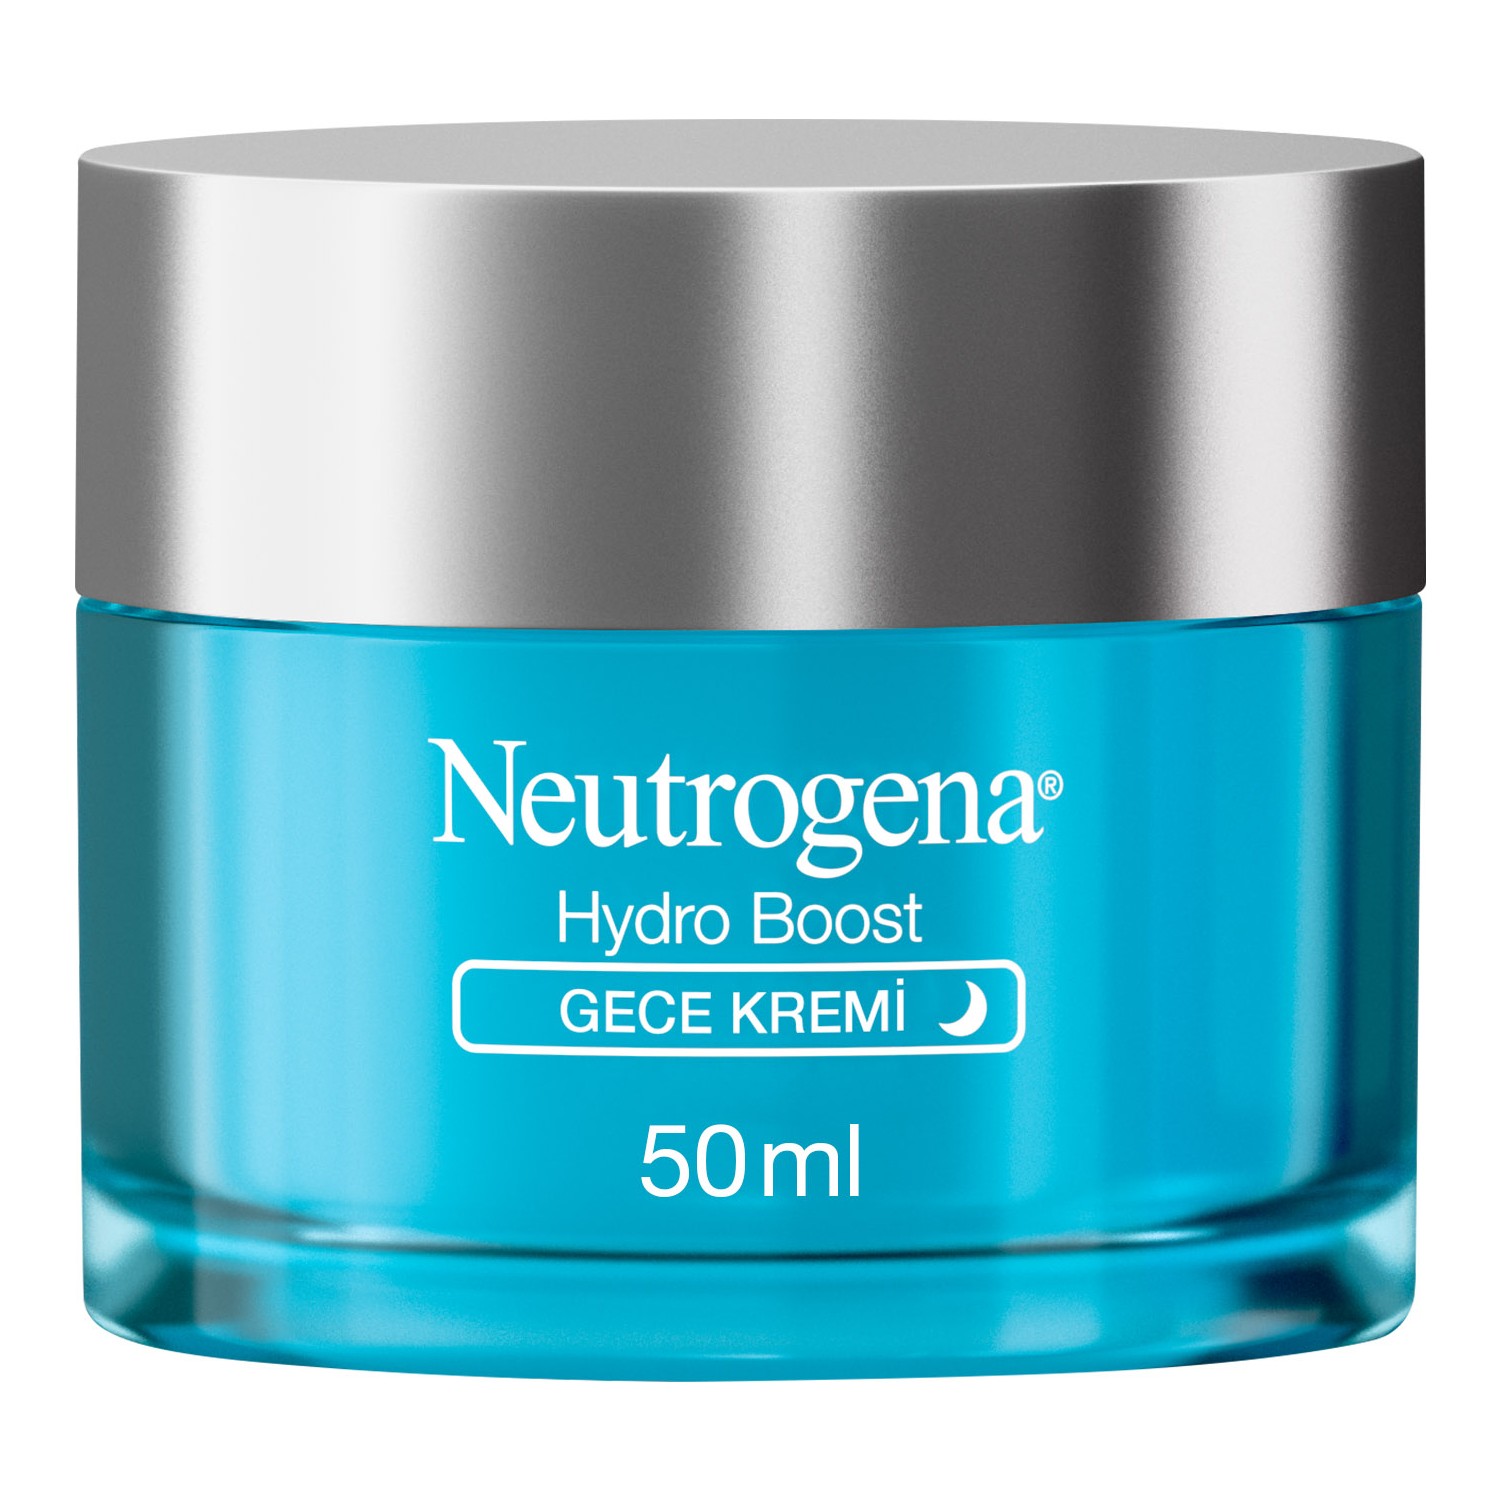 Ночной крем Neutrogena Hydro Boost, 50 мл крем neutrogena hydro boost spf25 увлажняющий 2 упаковки по 50 мл